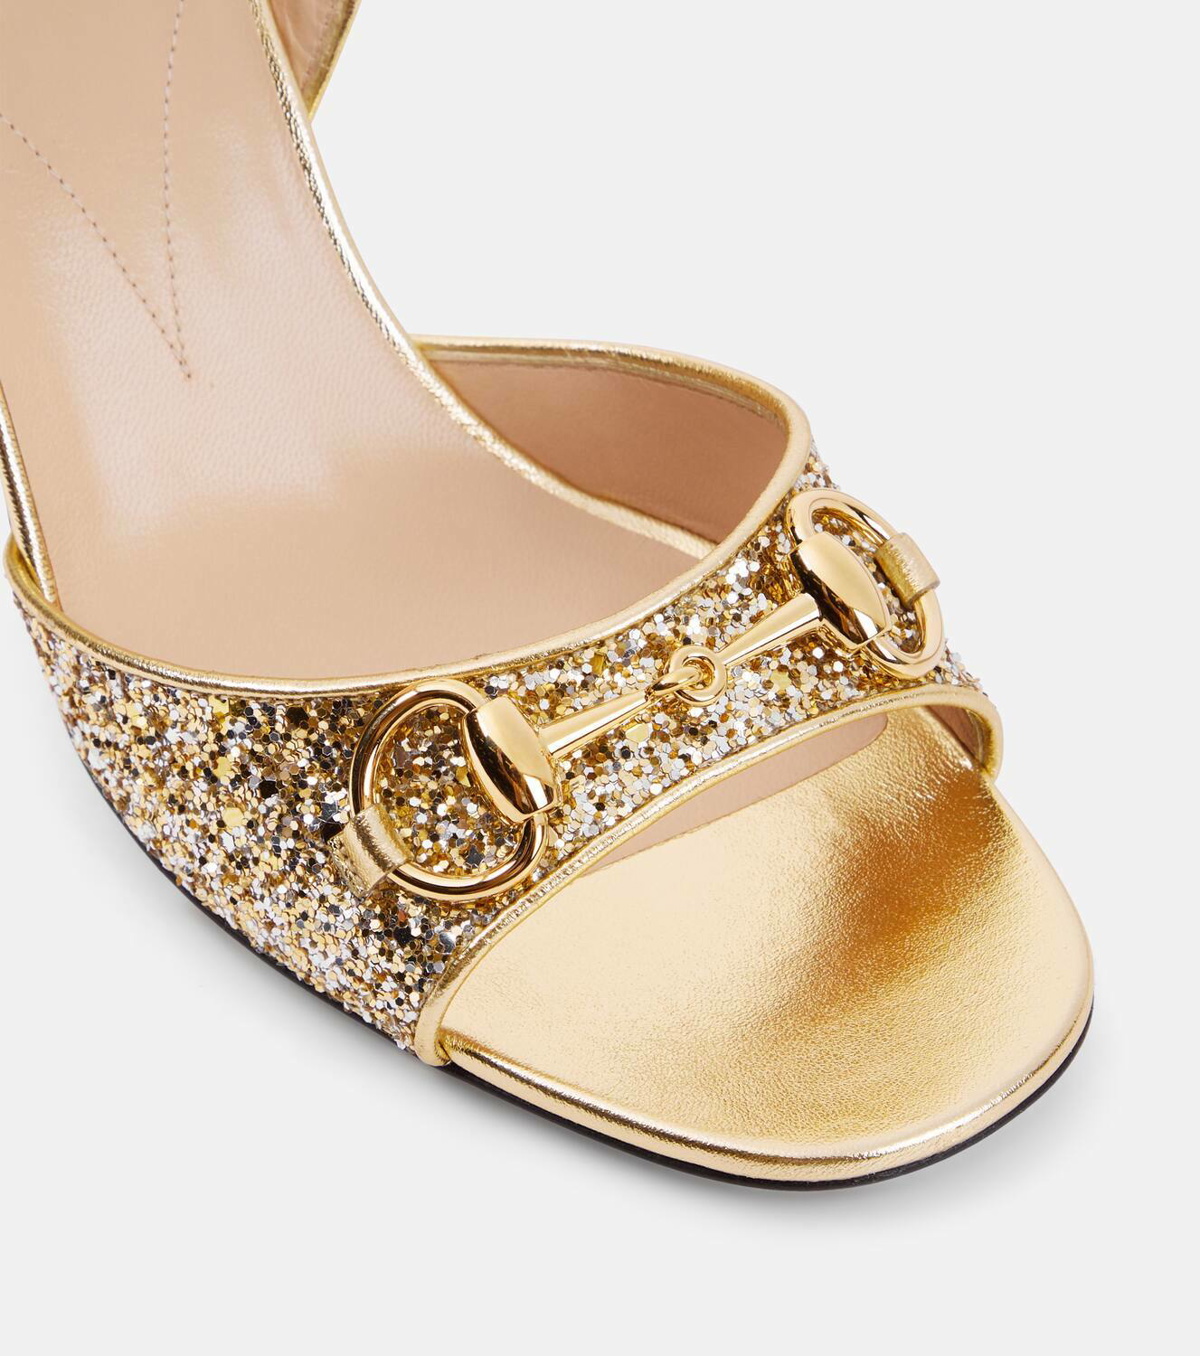 Gucci Lady Horsebit embellished sandals